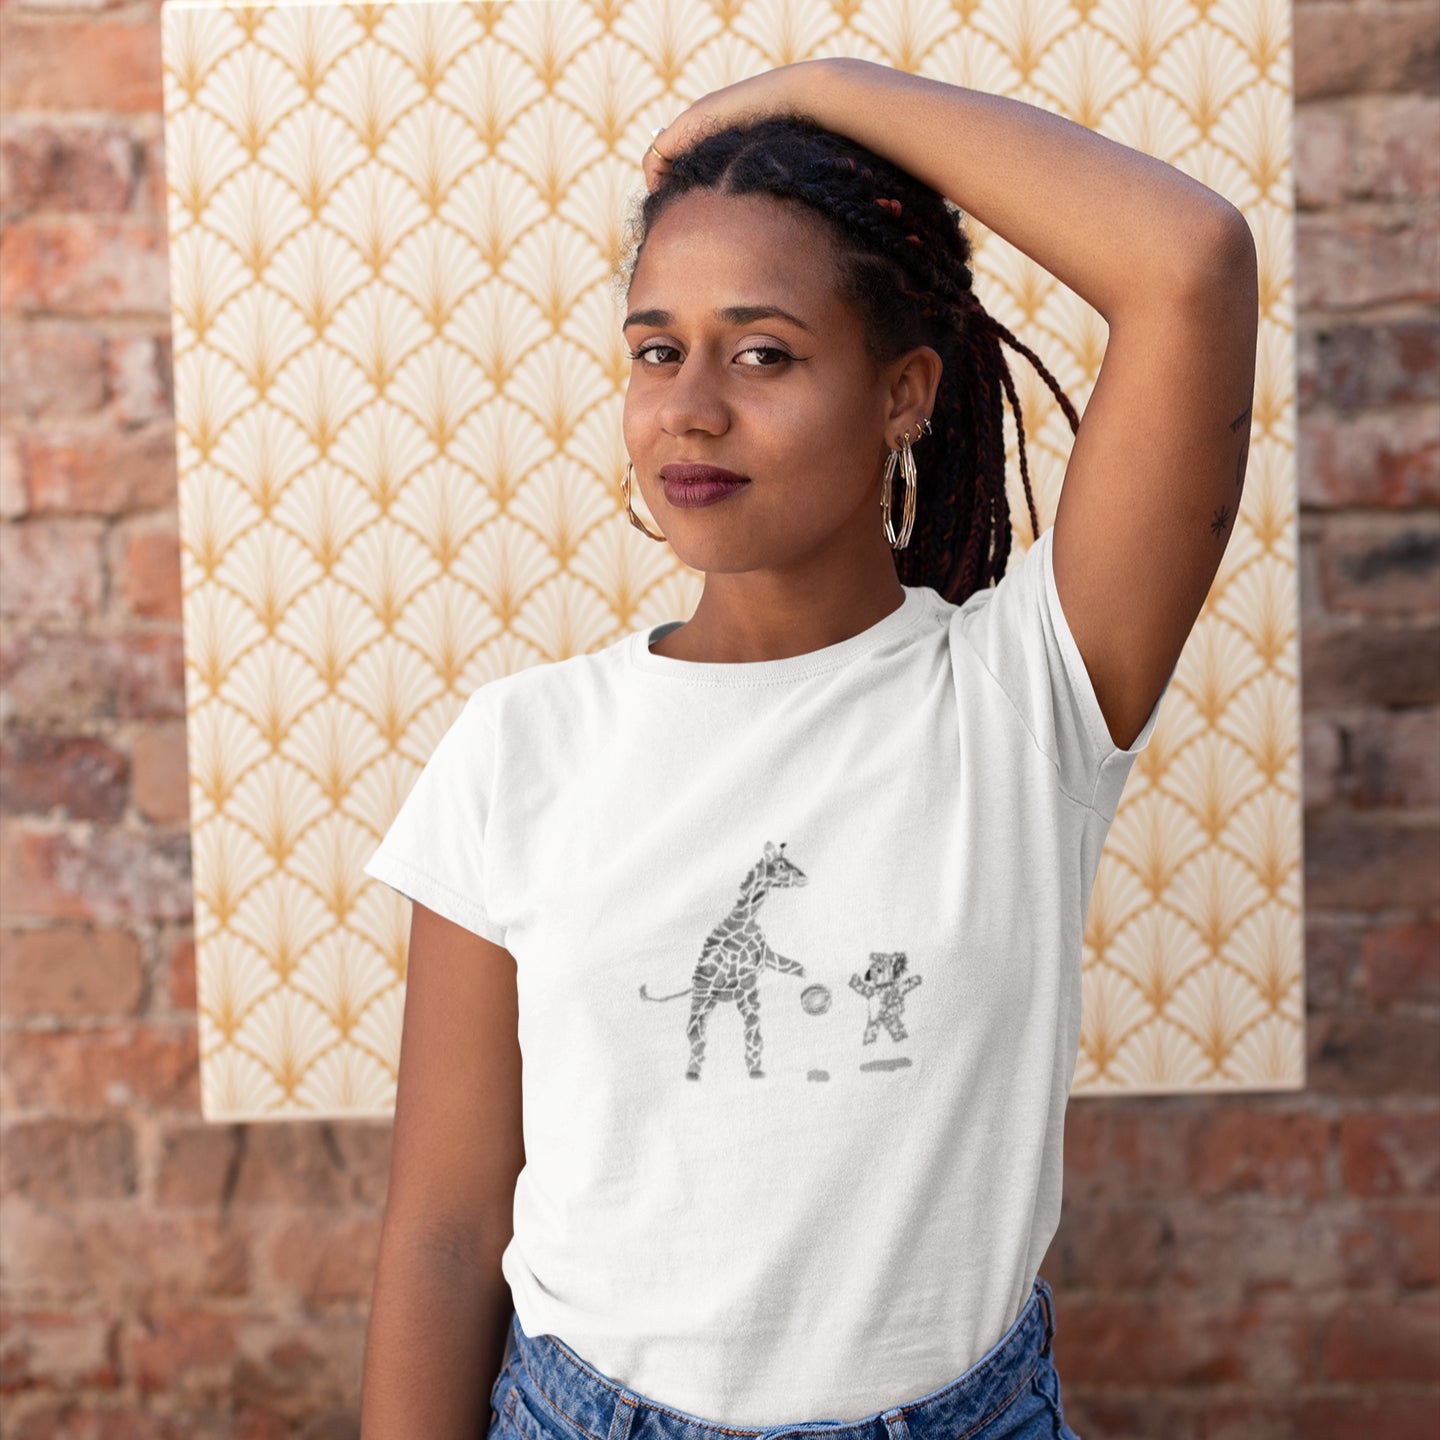 Koala Giraffe Basketball | Women's 100% Organic Cotton T Shirt worn by a woman